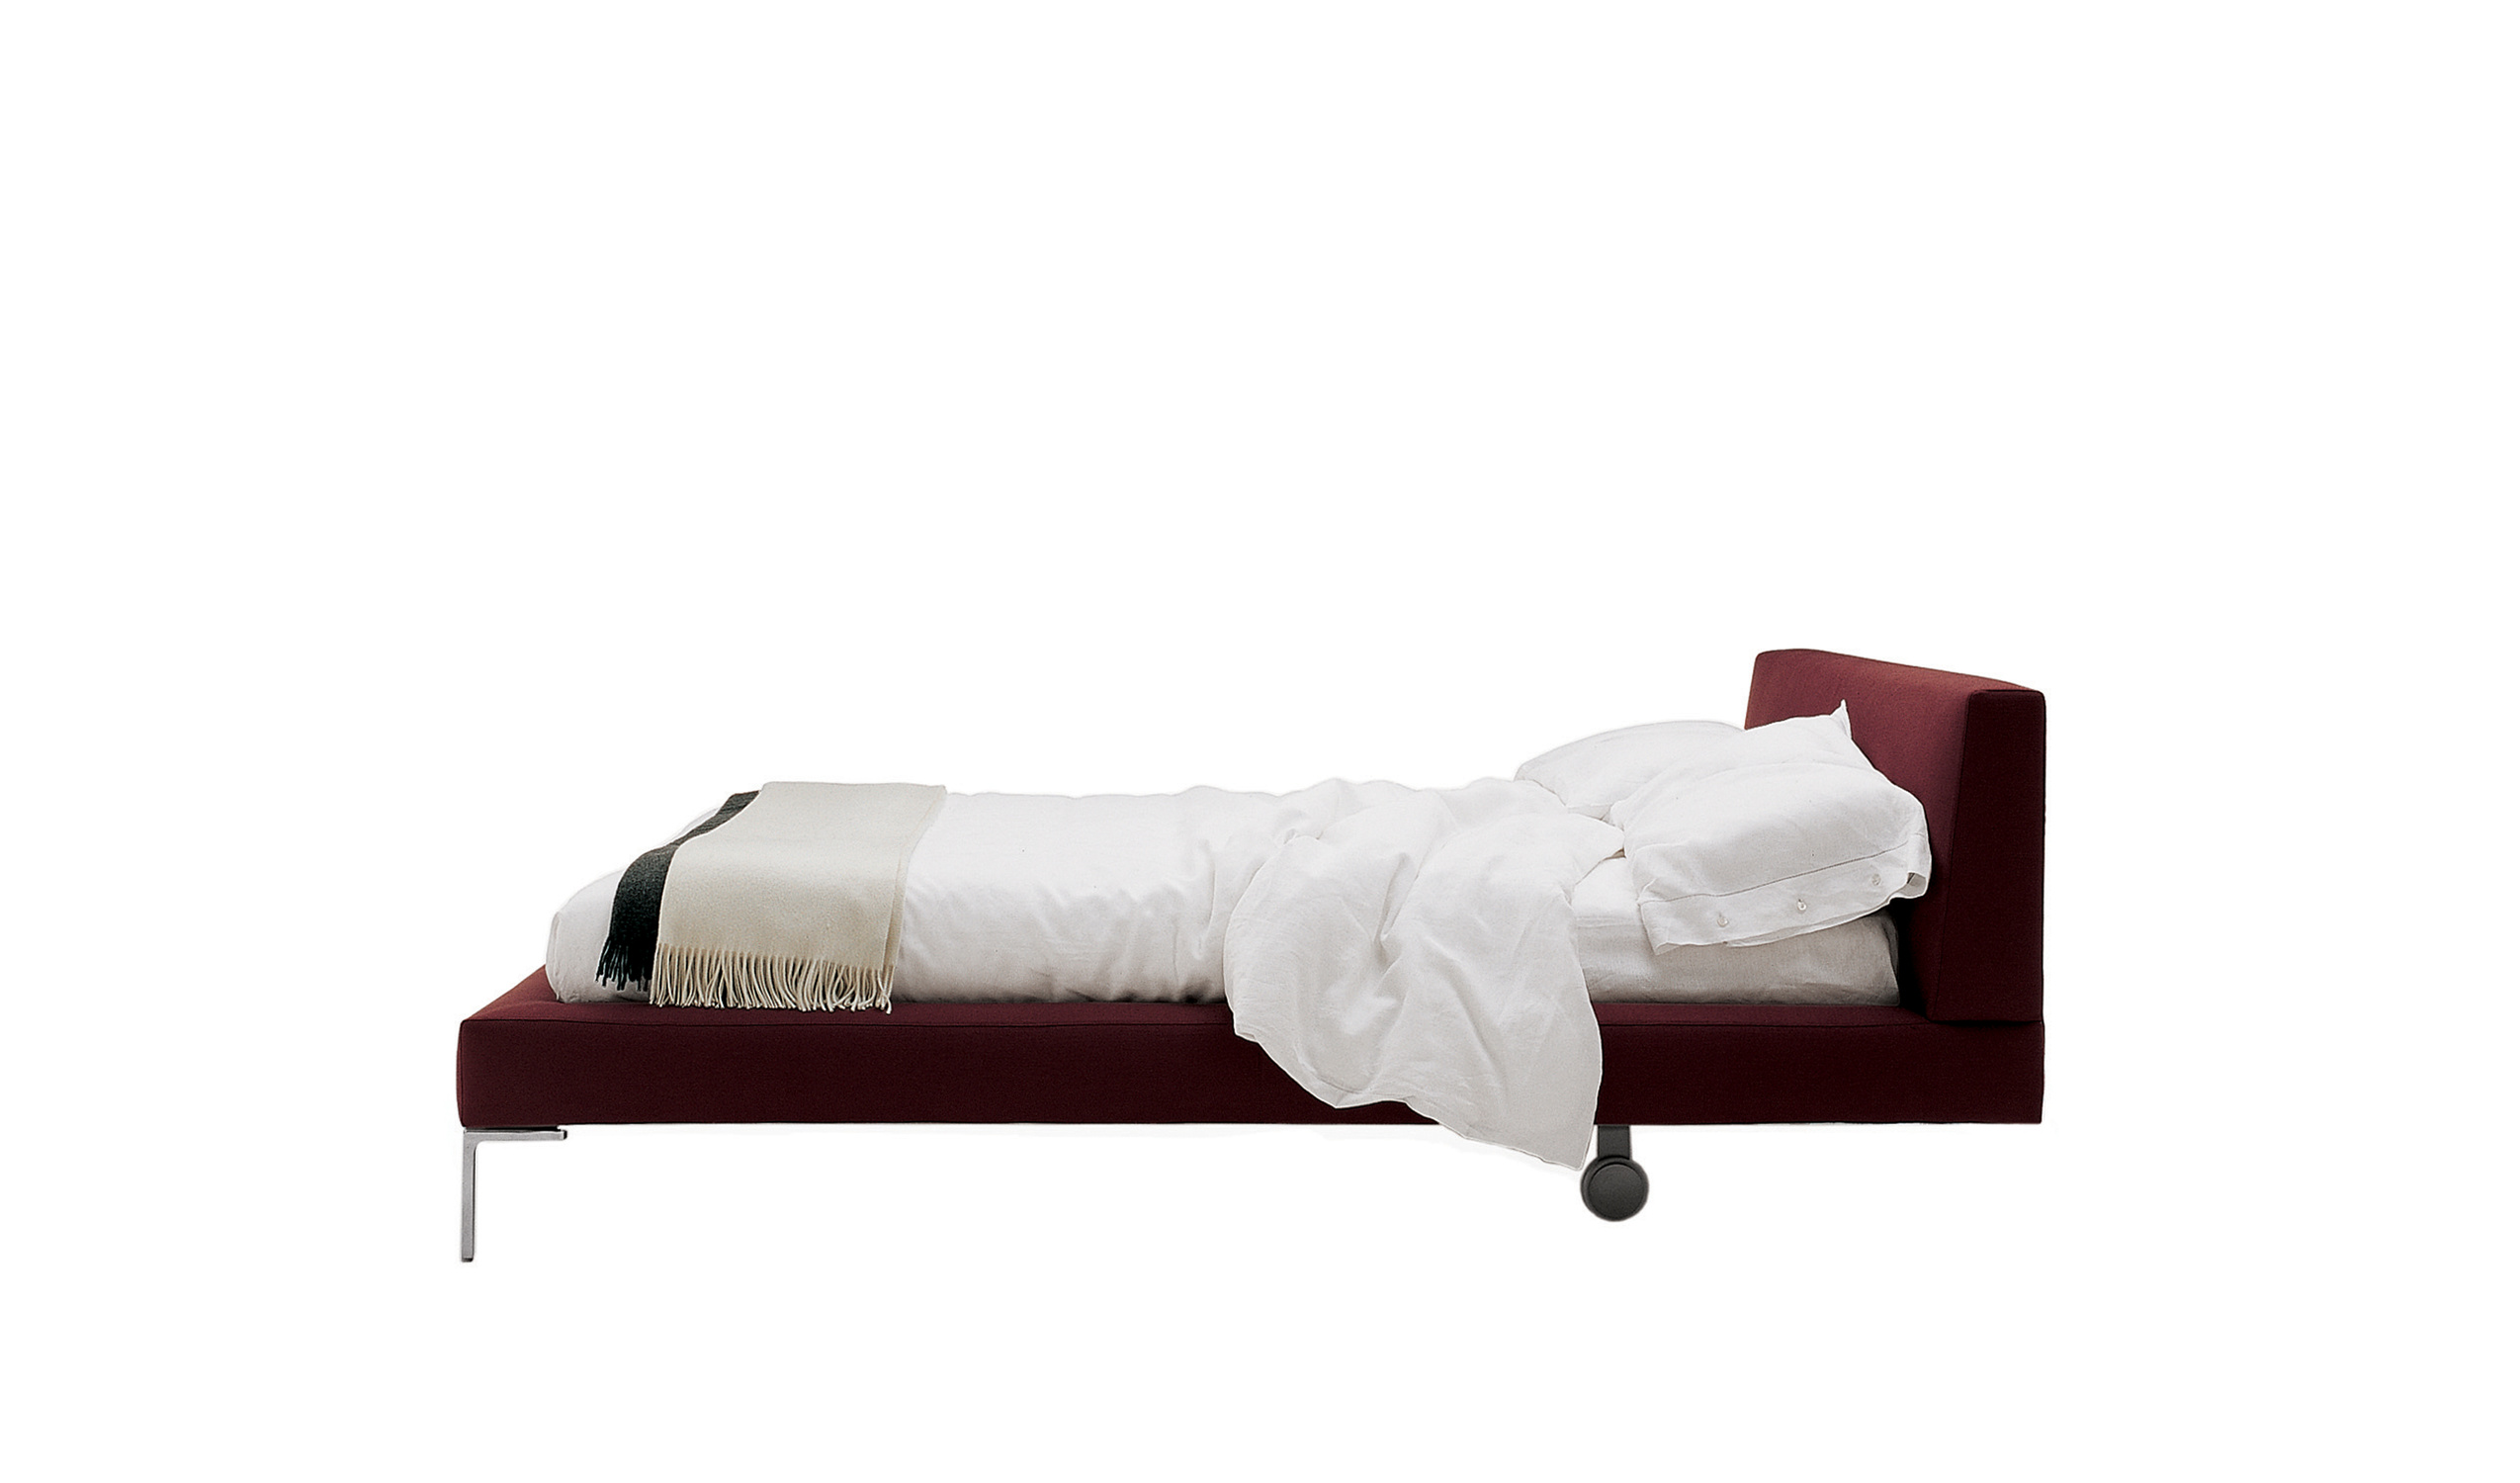 Designer Italian modern beds - Charles Beds 1